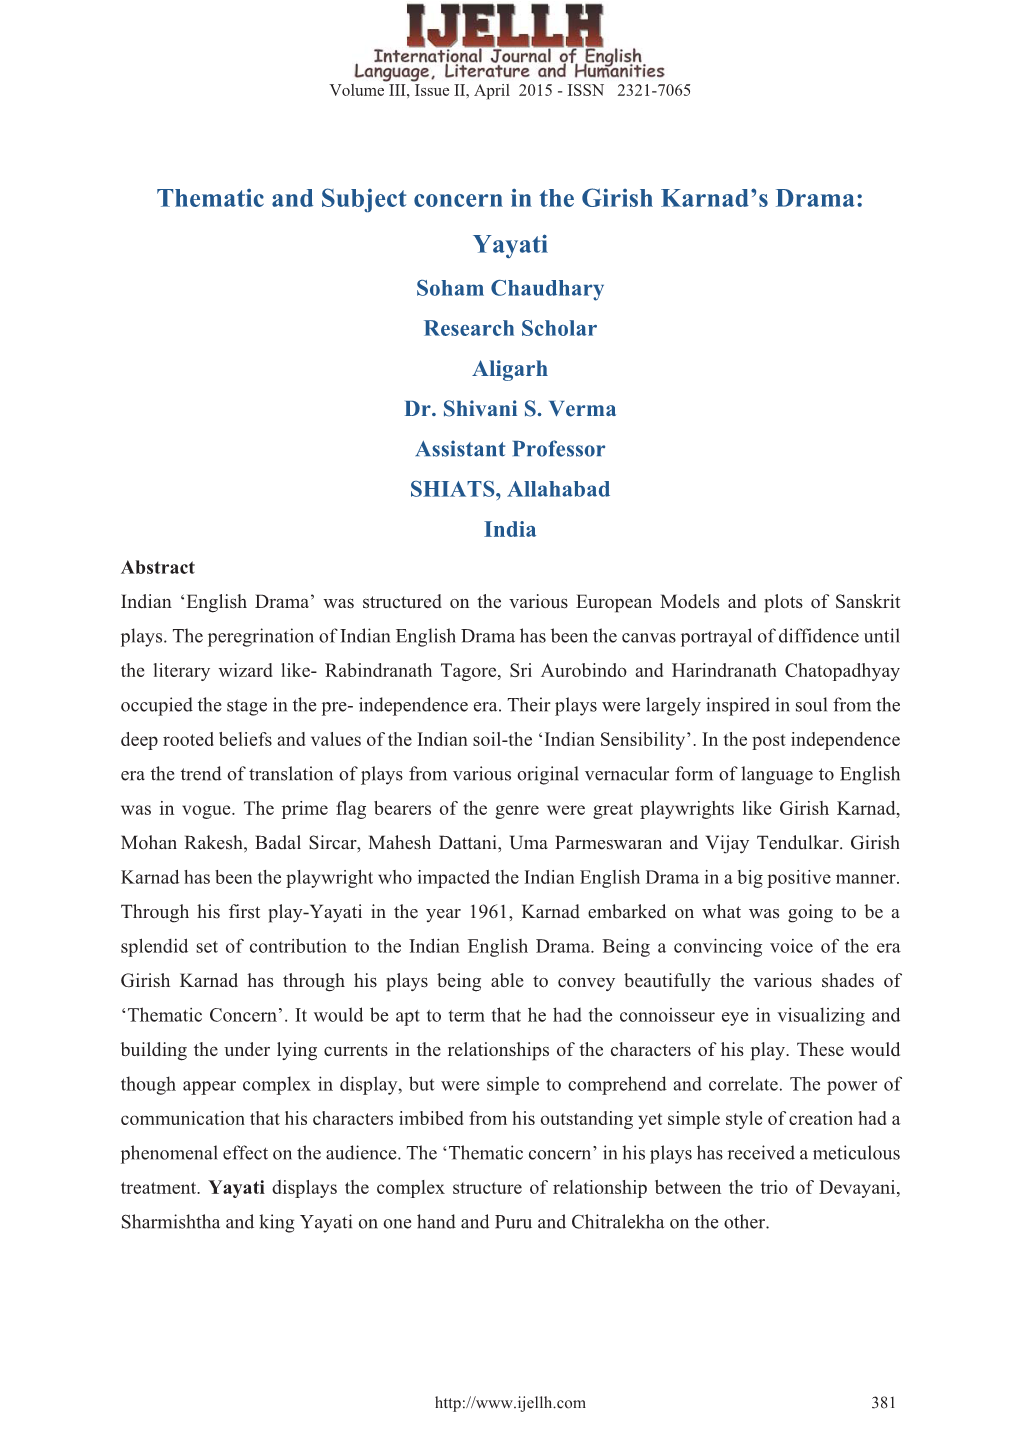 Thematic and Subject Concern in the Girish Karnad's Drama: Yayati